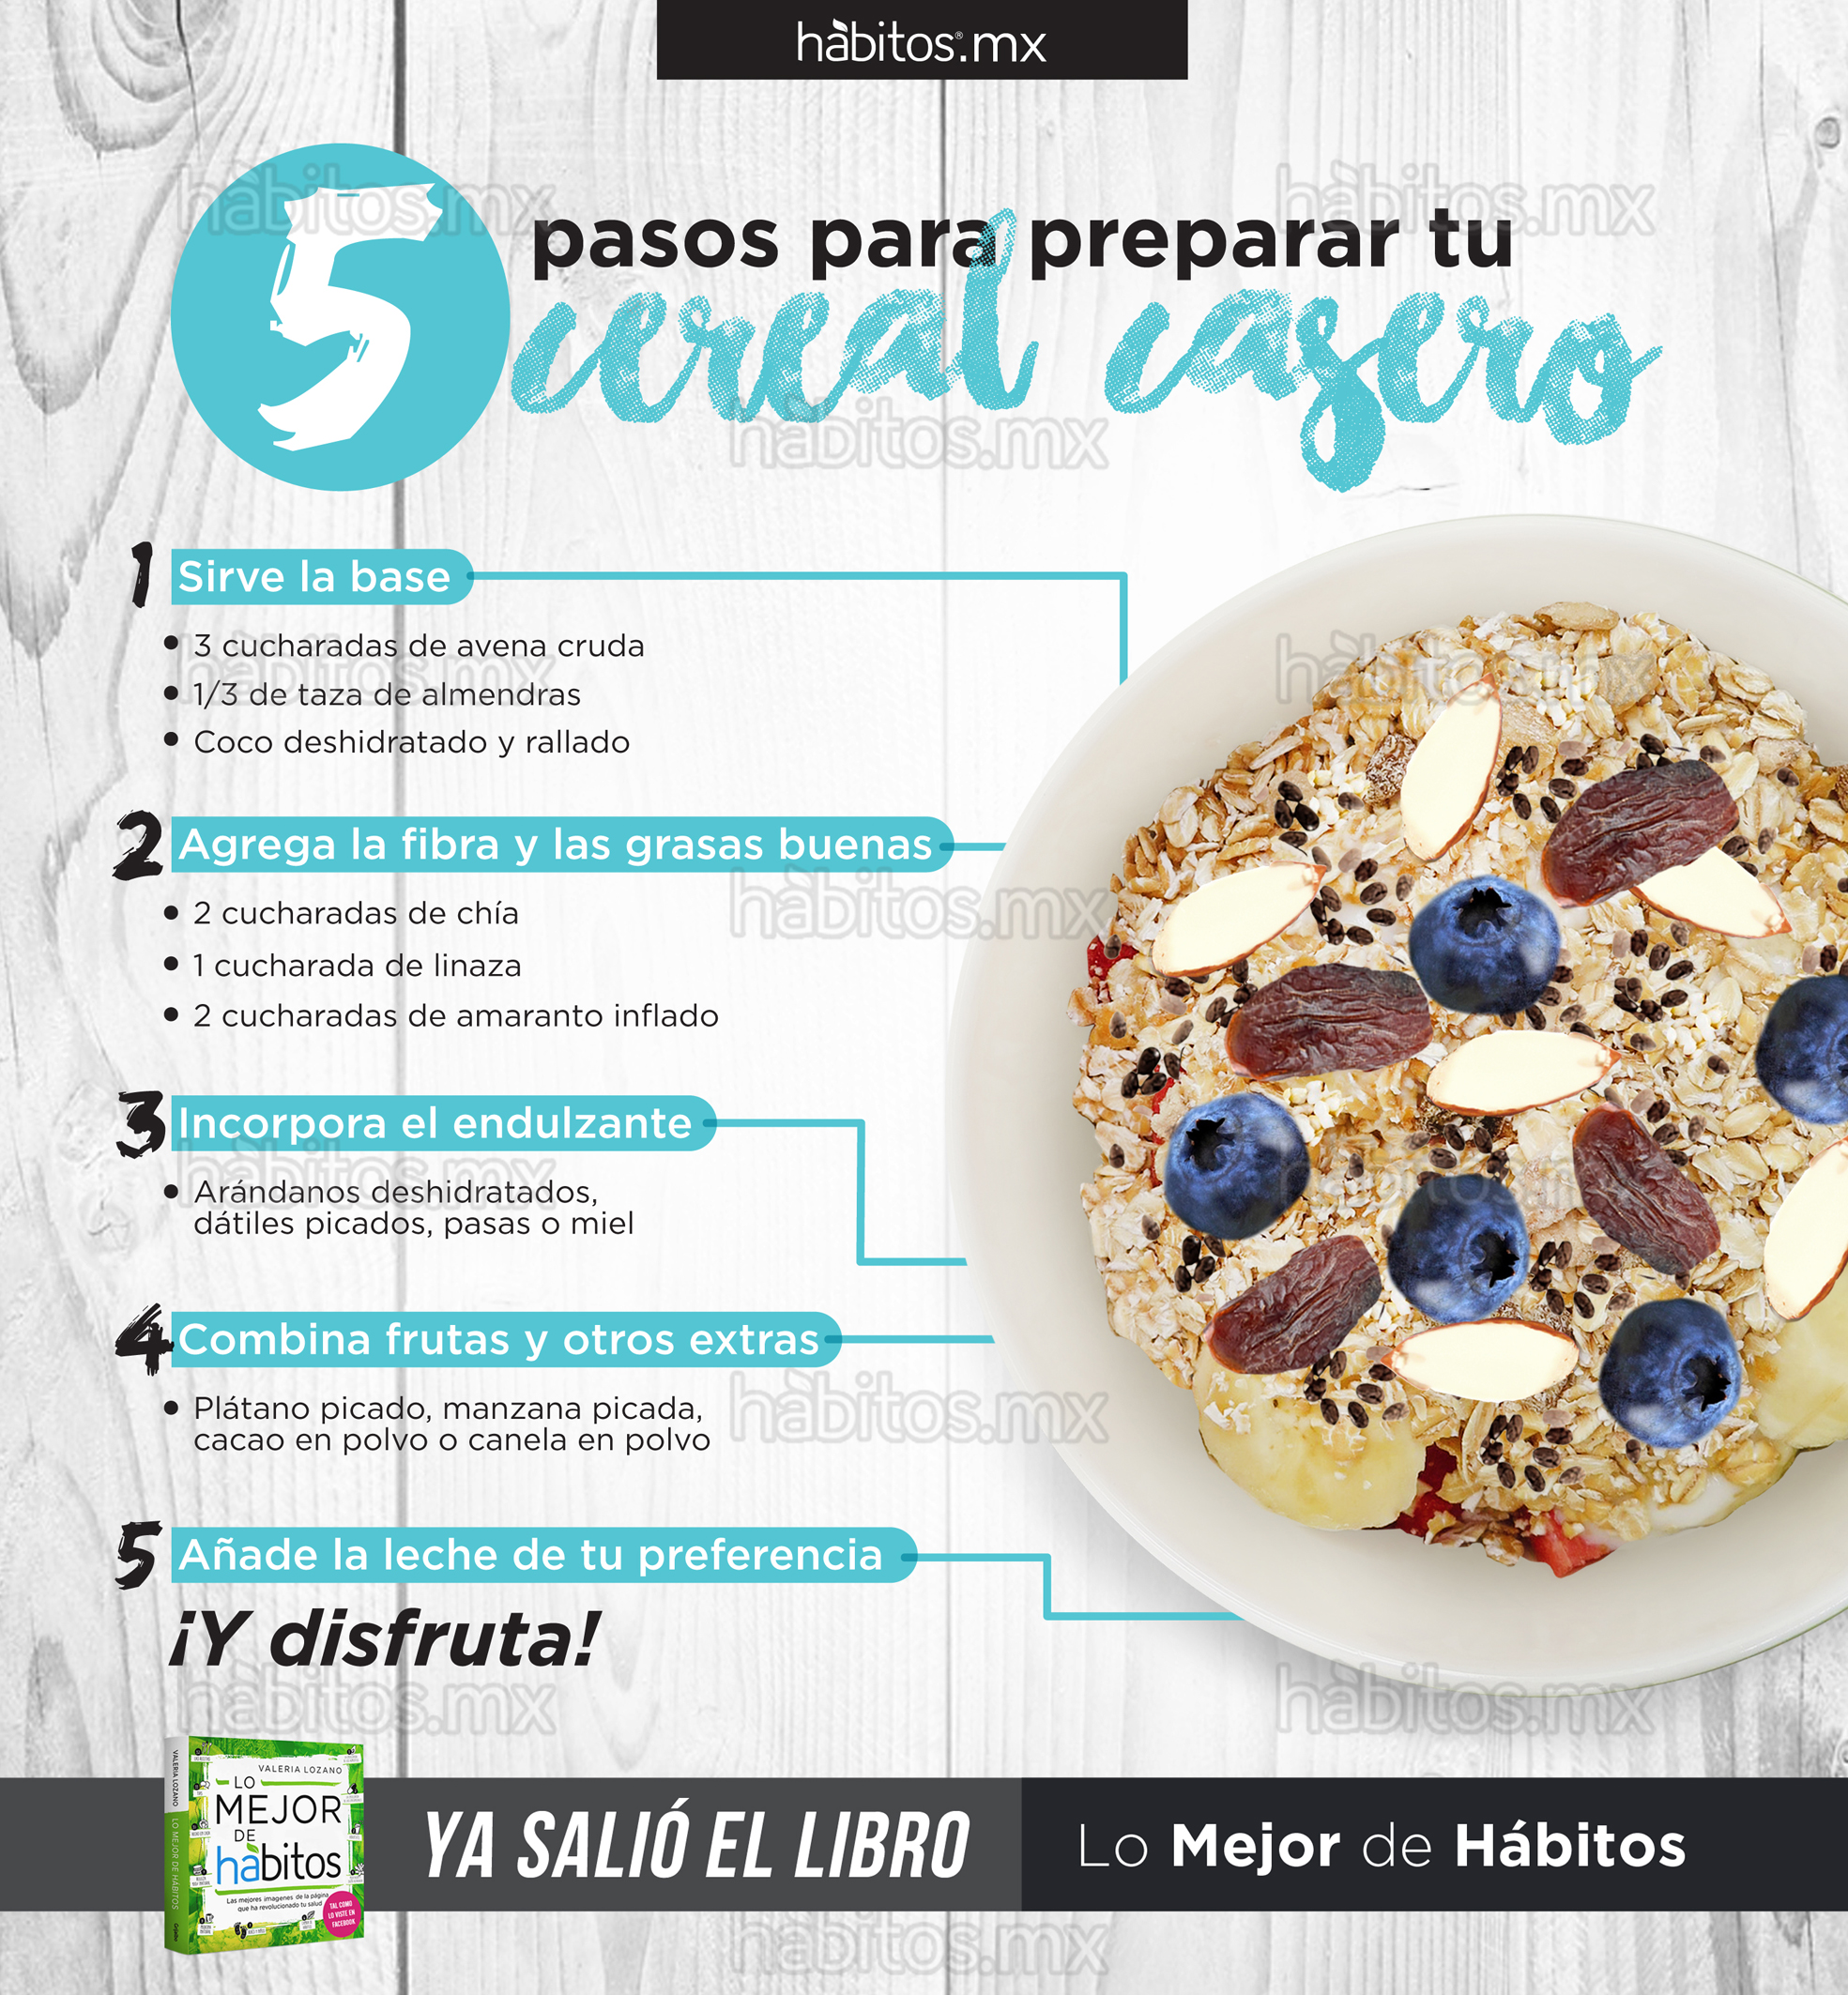 5 pasos para preparar tu cereal casero! – Hábitos Health Coaching